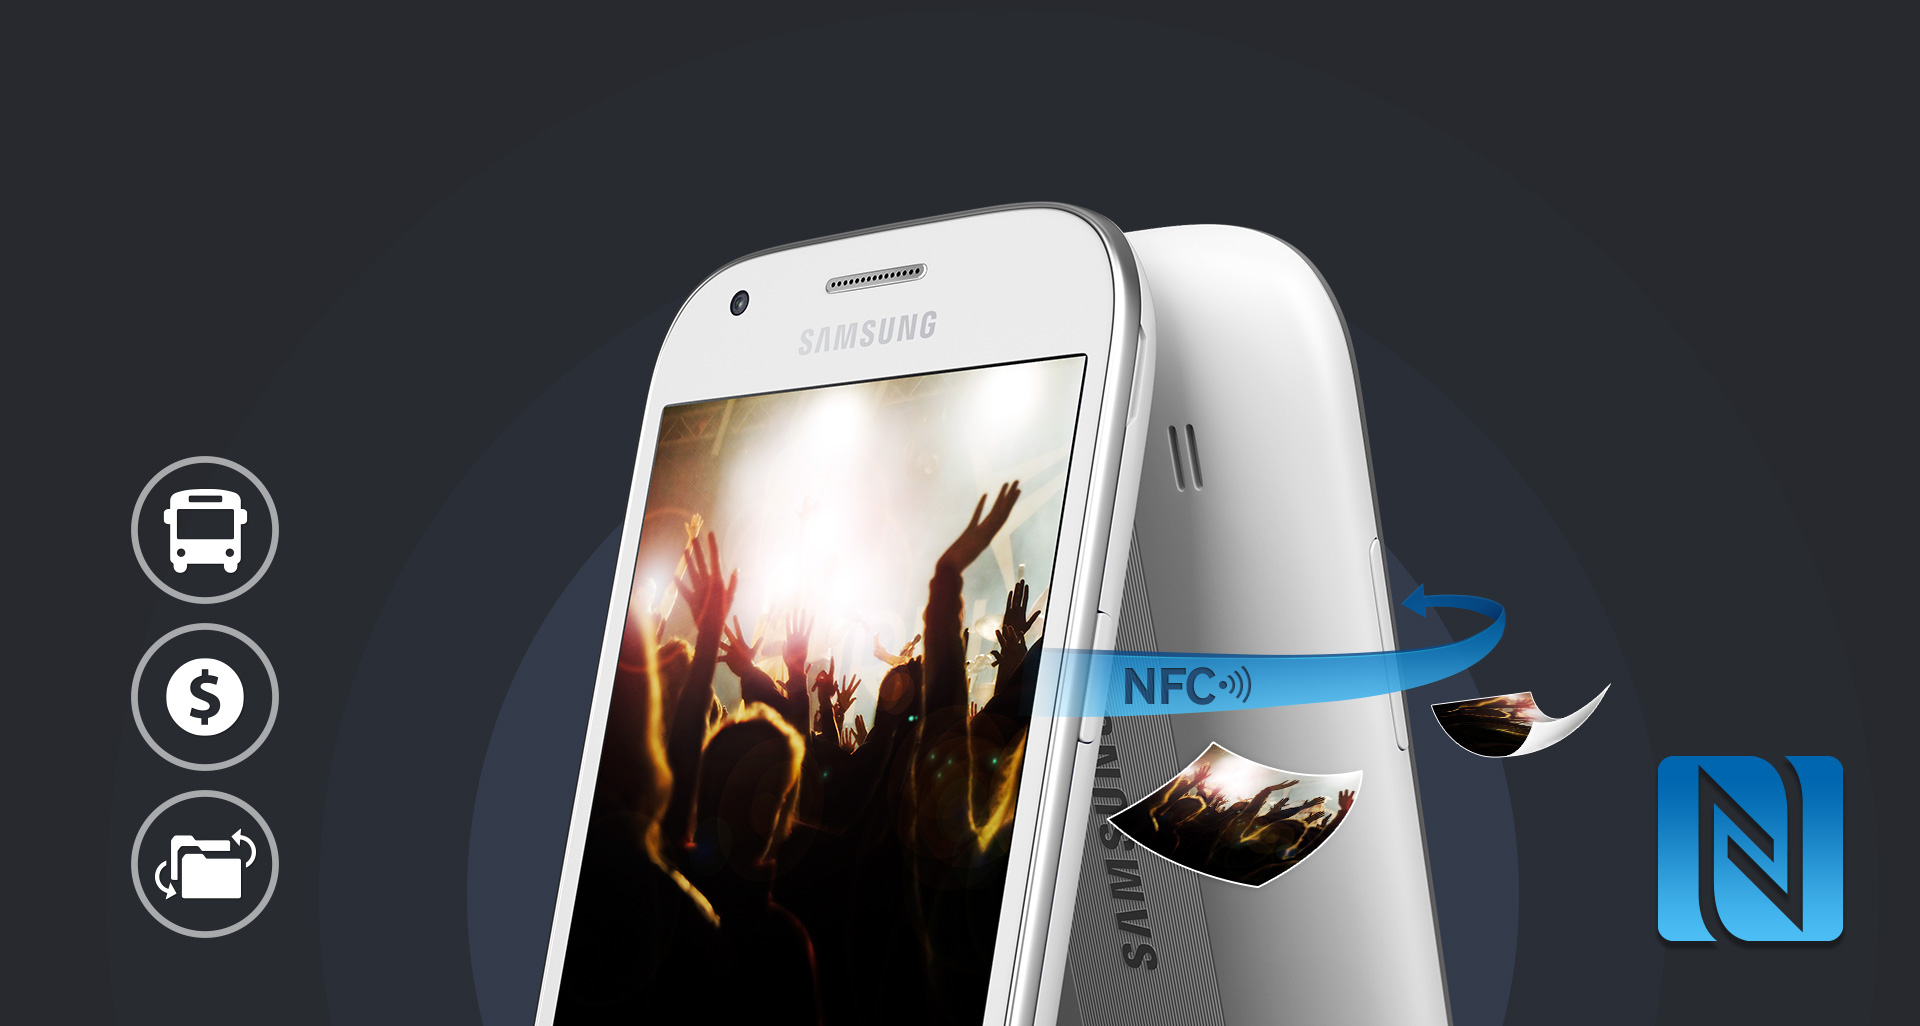 Convenient NFC functions